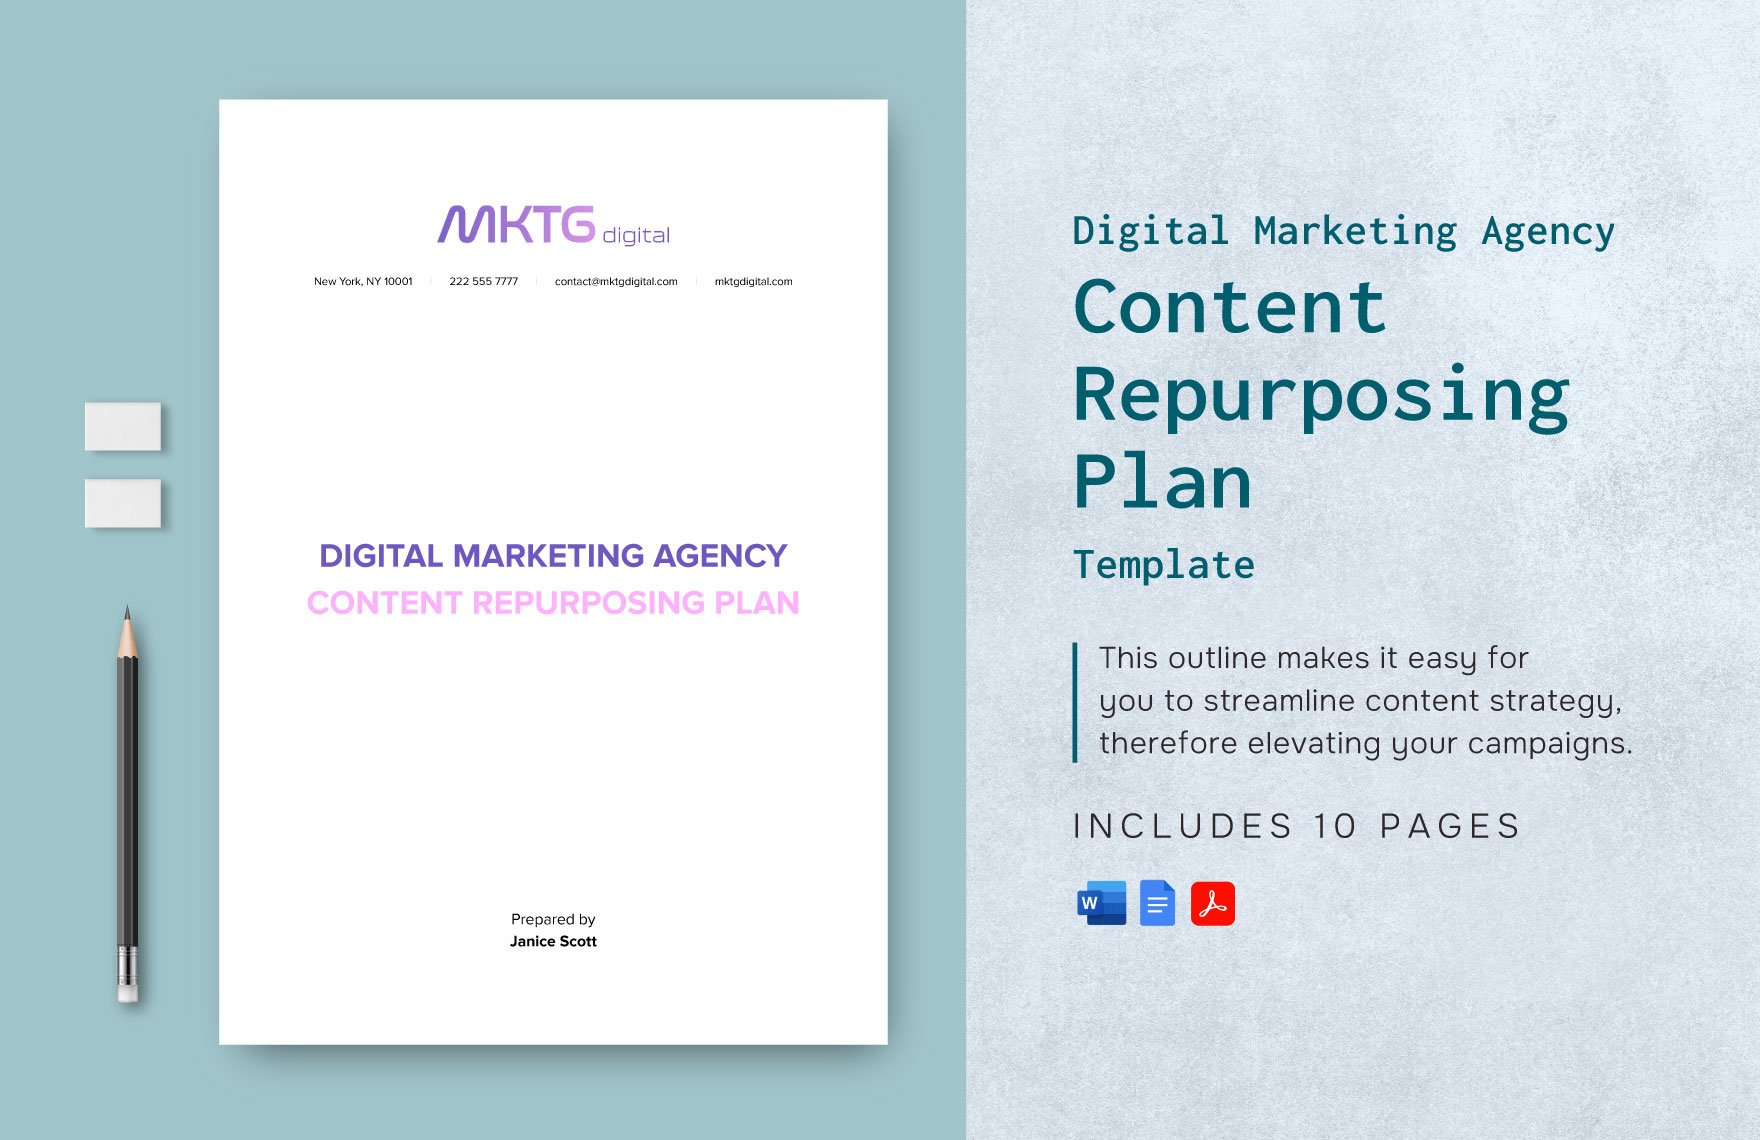 Digital Marketing Agency Content Repurposing Plan Template